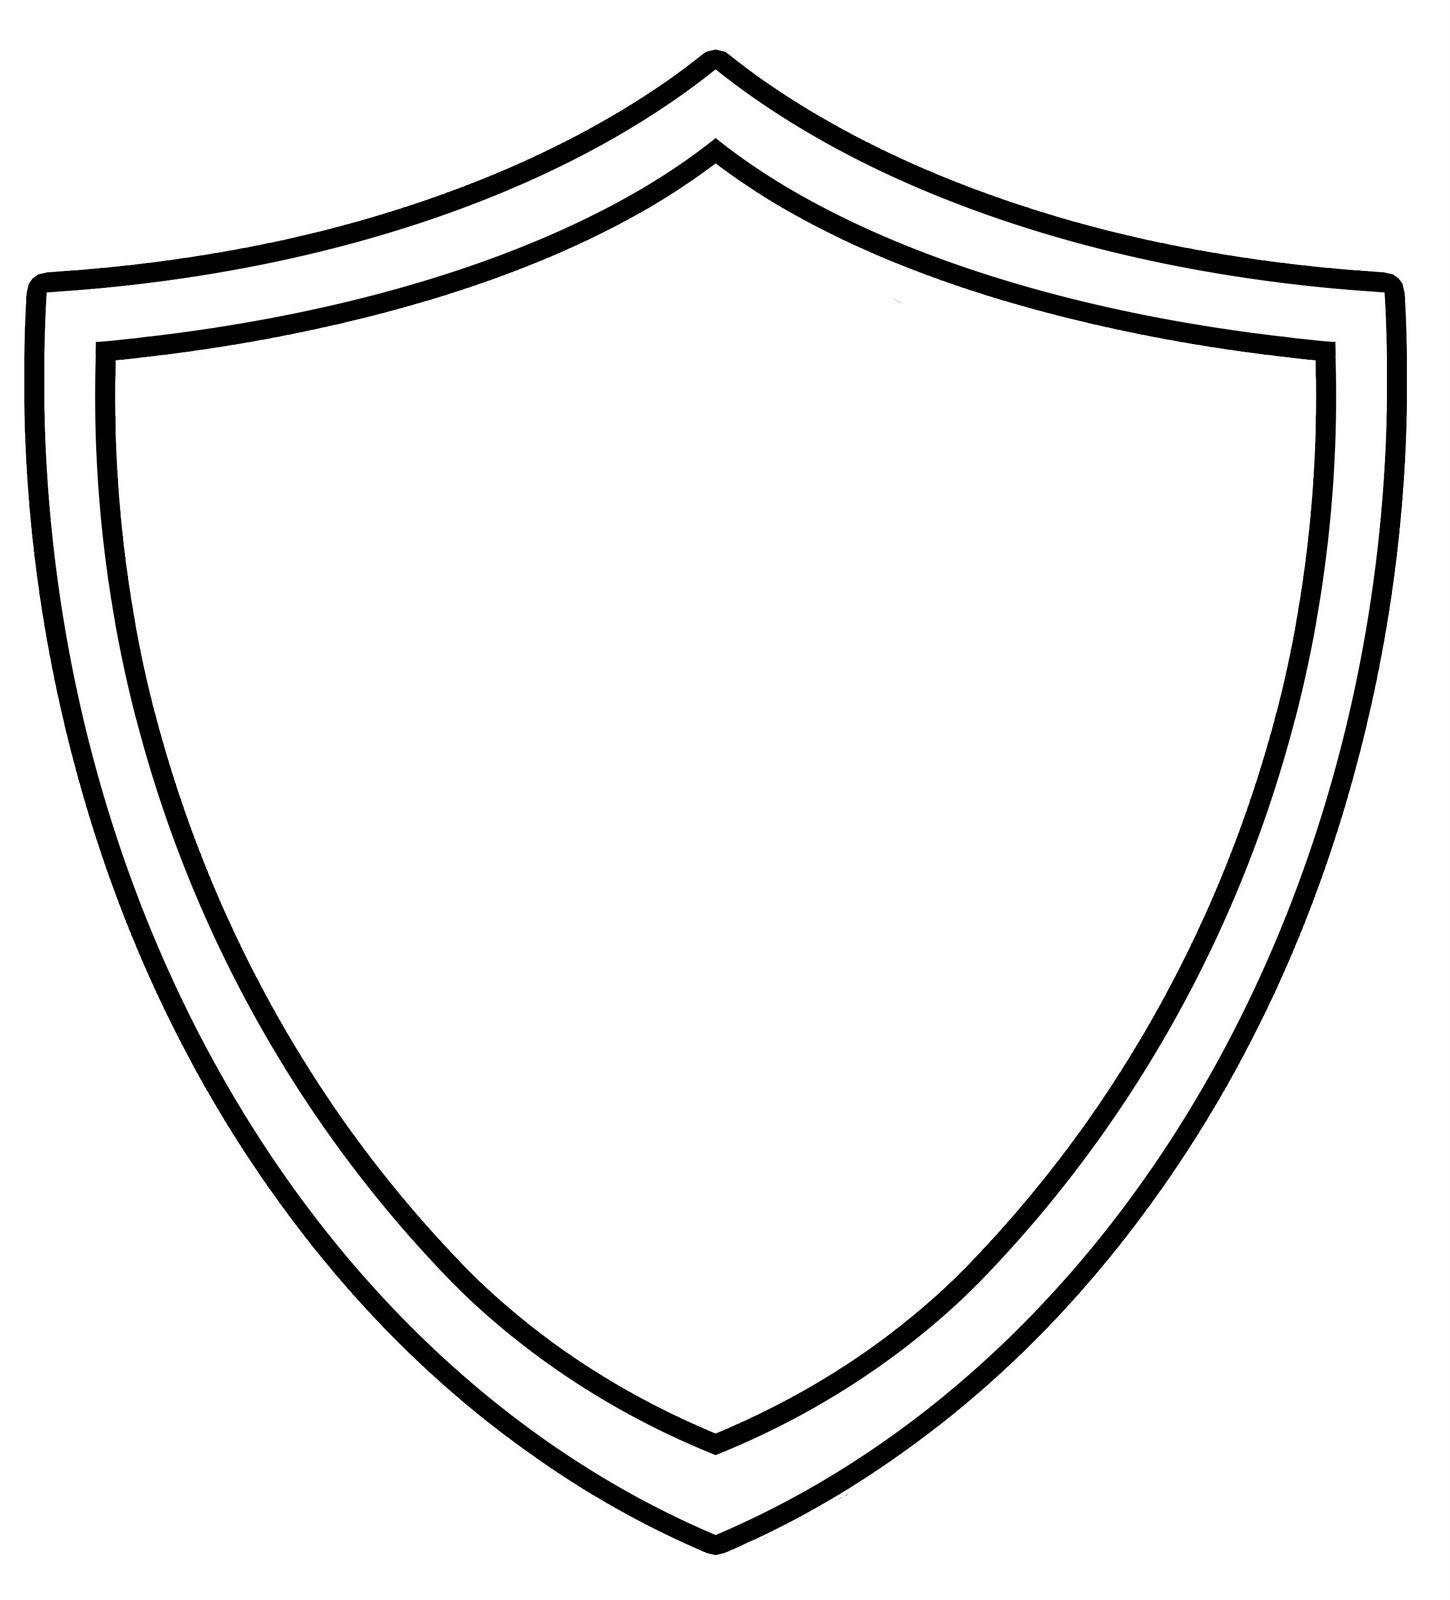 Empty Shield Logo - Free Blank Superman Logo, Download Free Clip Art, Free Clip Art